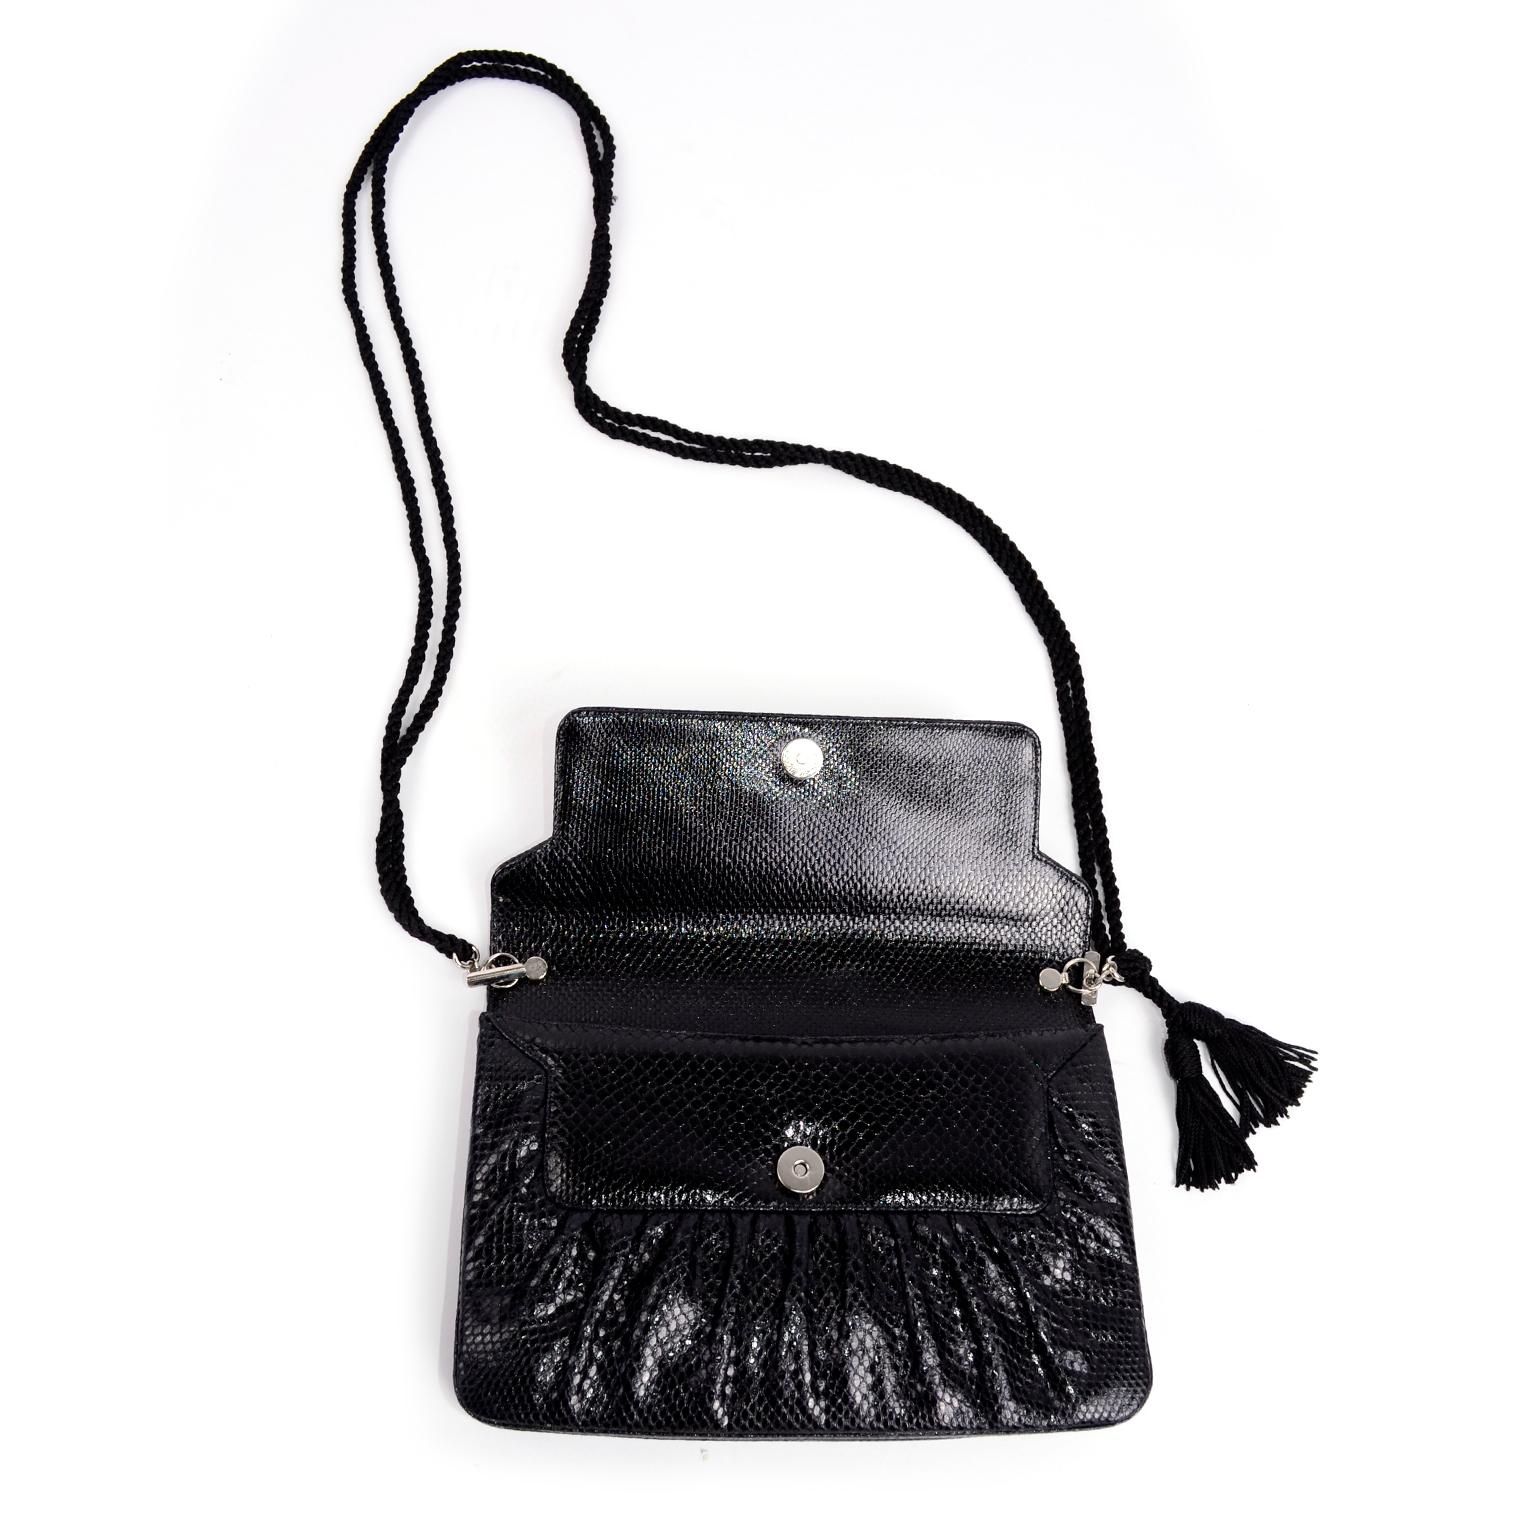 Women's New w Tags Judith Leiber Snakeskin Shoulder Bag or Clutch Handbag W Cabochon